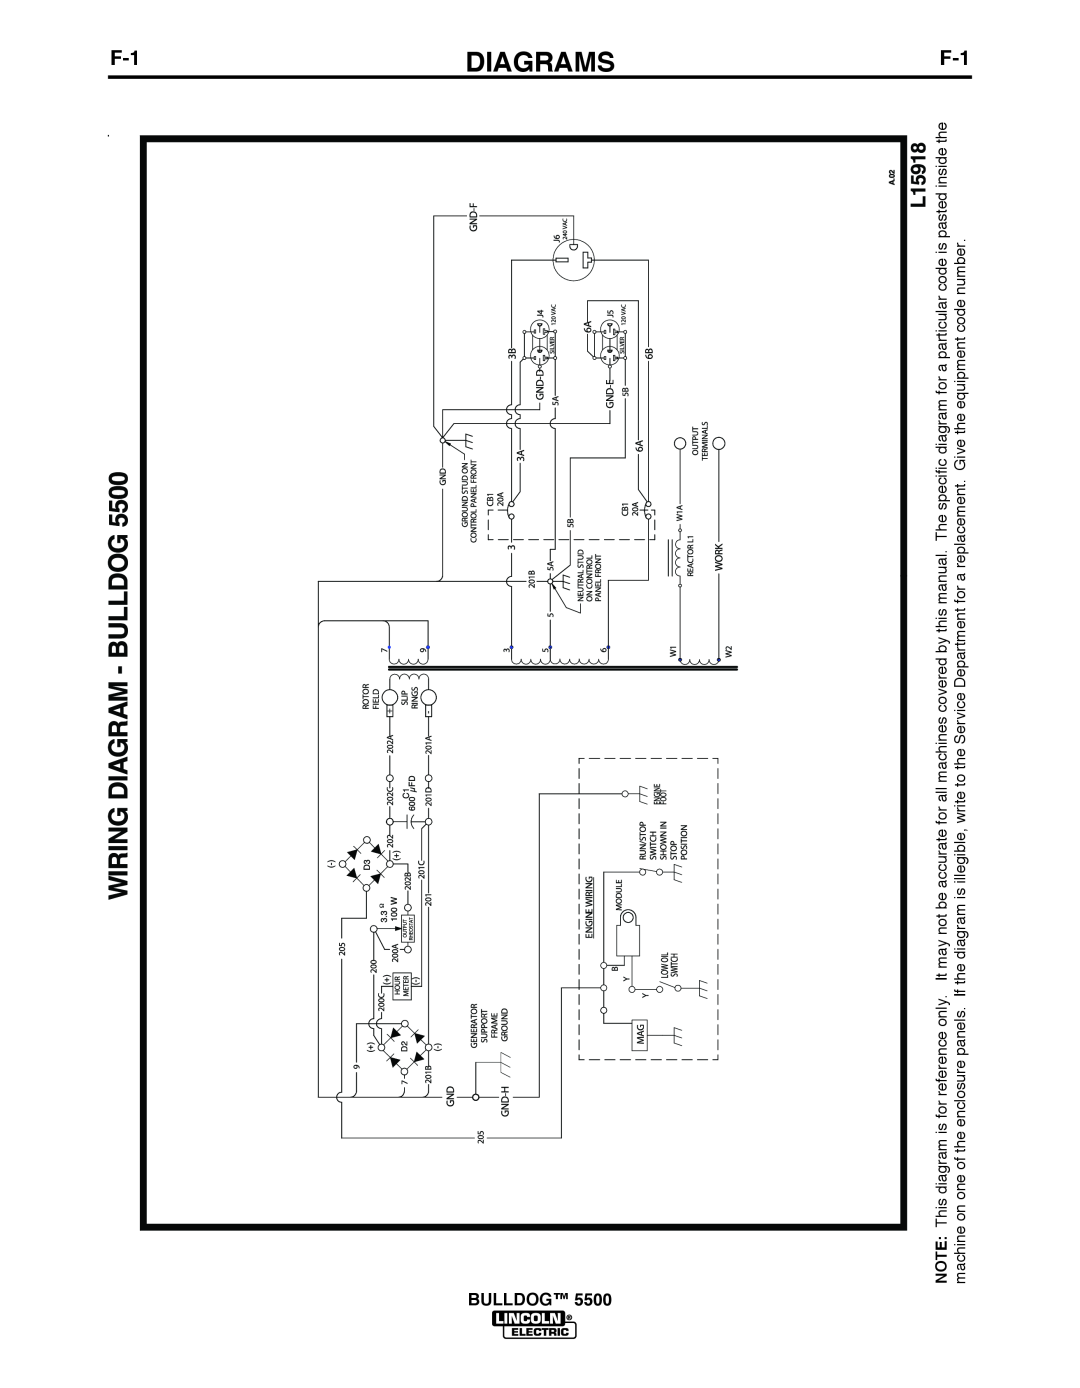 Lincoln Electric IM10074 manual Diagrams, bULLDOG 